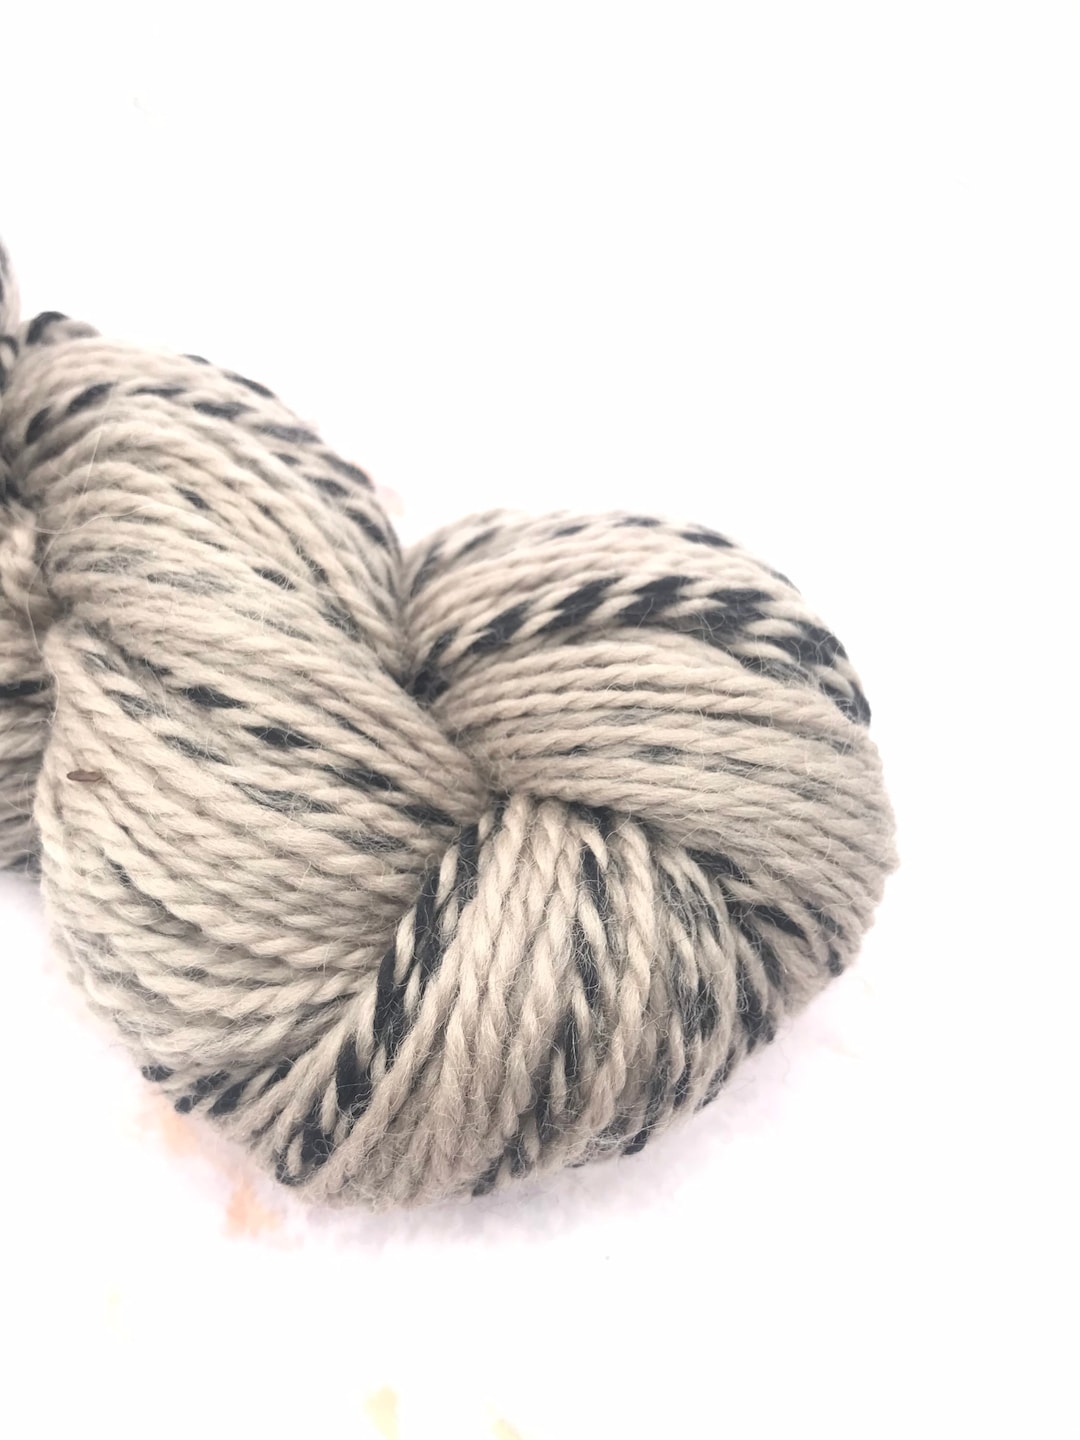 Undyed Wool WORSTED Yarn, Peruvian Highland Undyed Natural Worsted Wt Gray  Black Yarn 